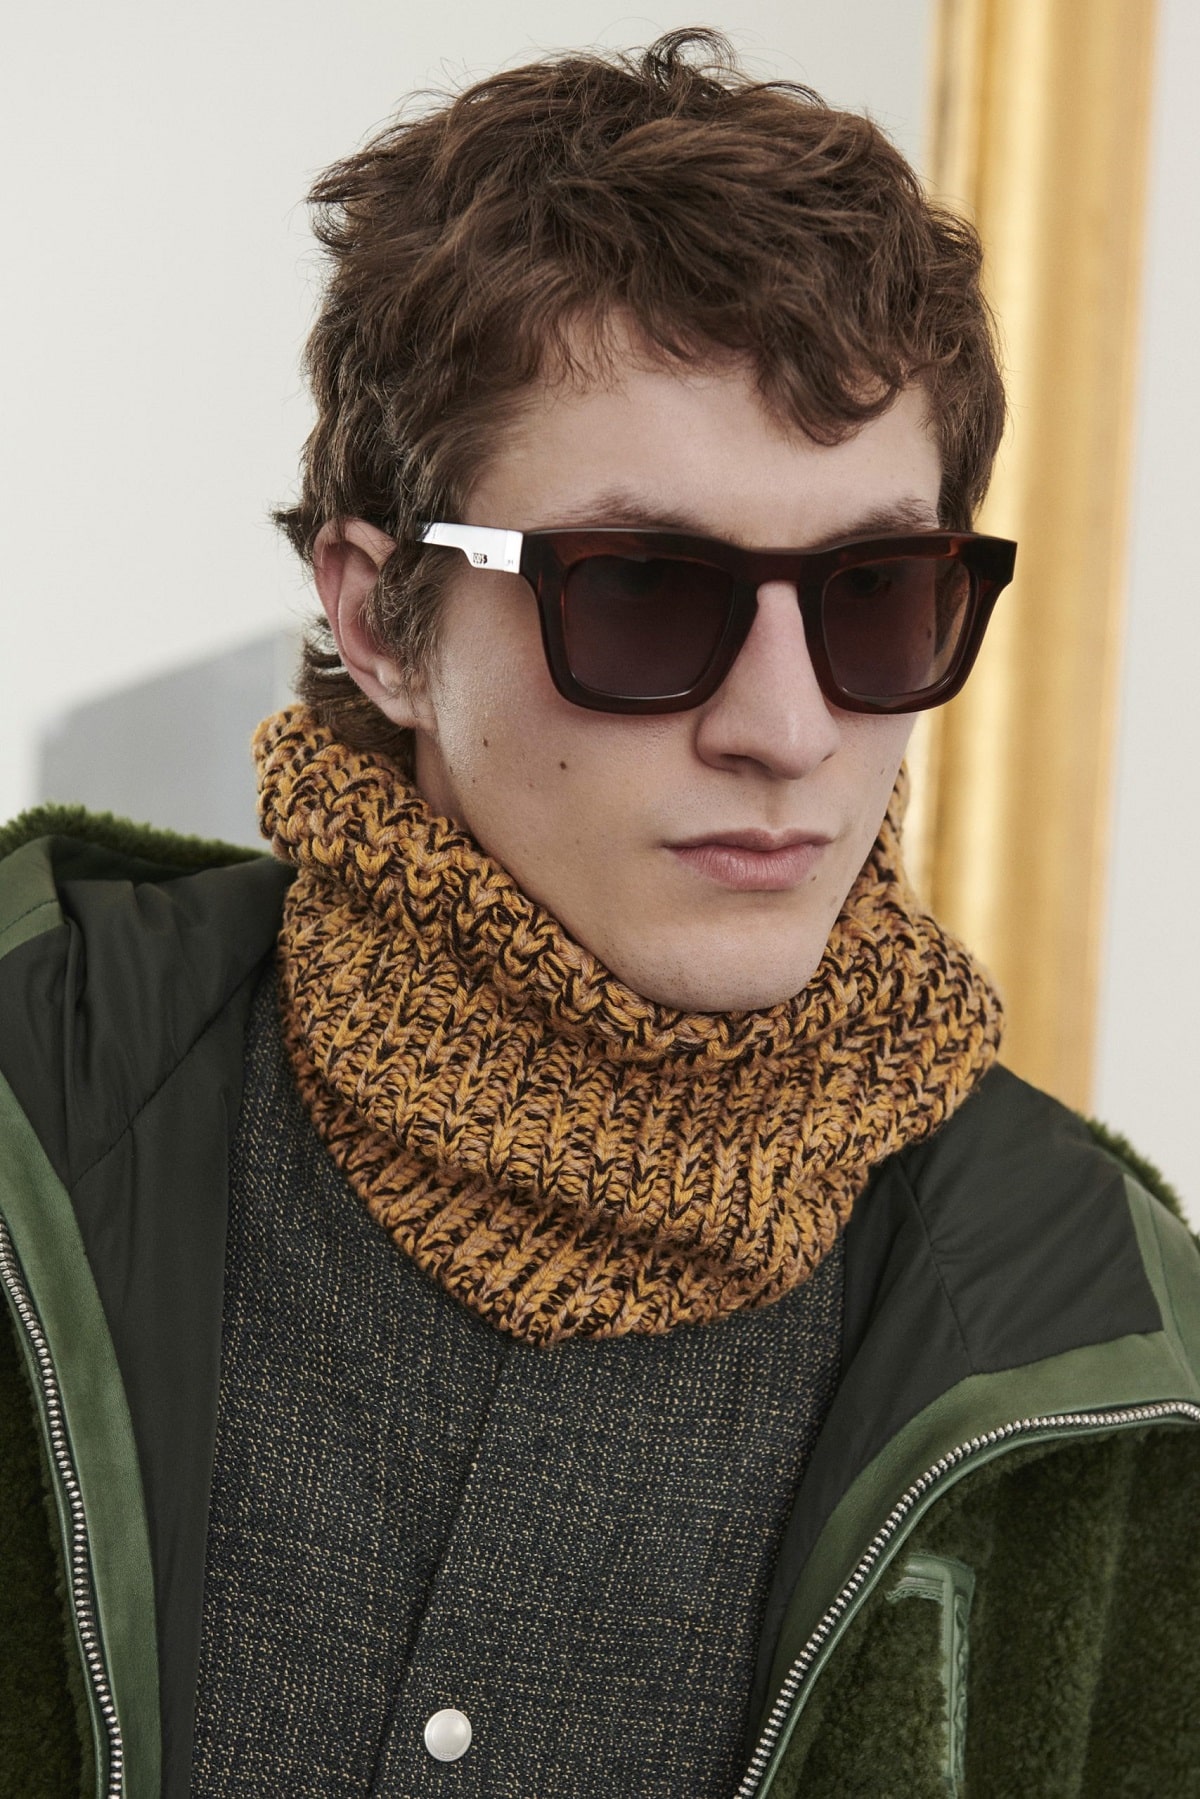 TOP Autumn/Winter Men's Fashion Trends 2022 